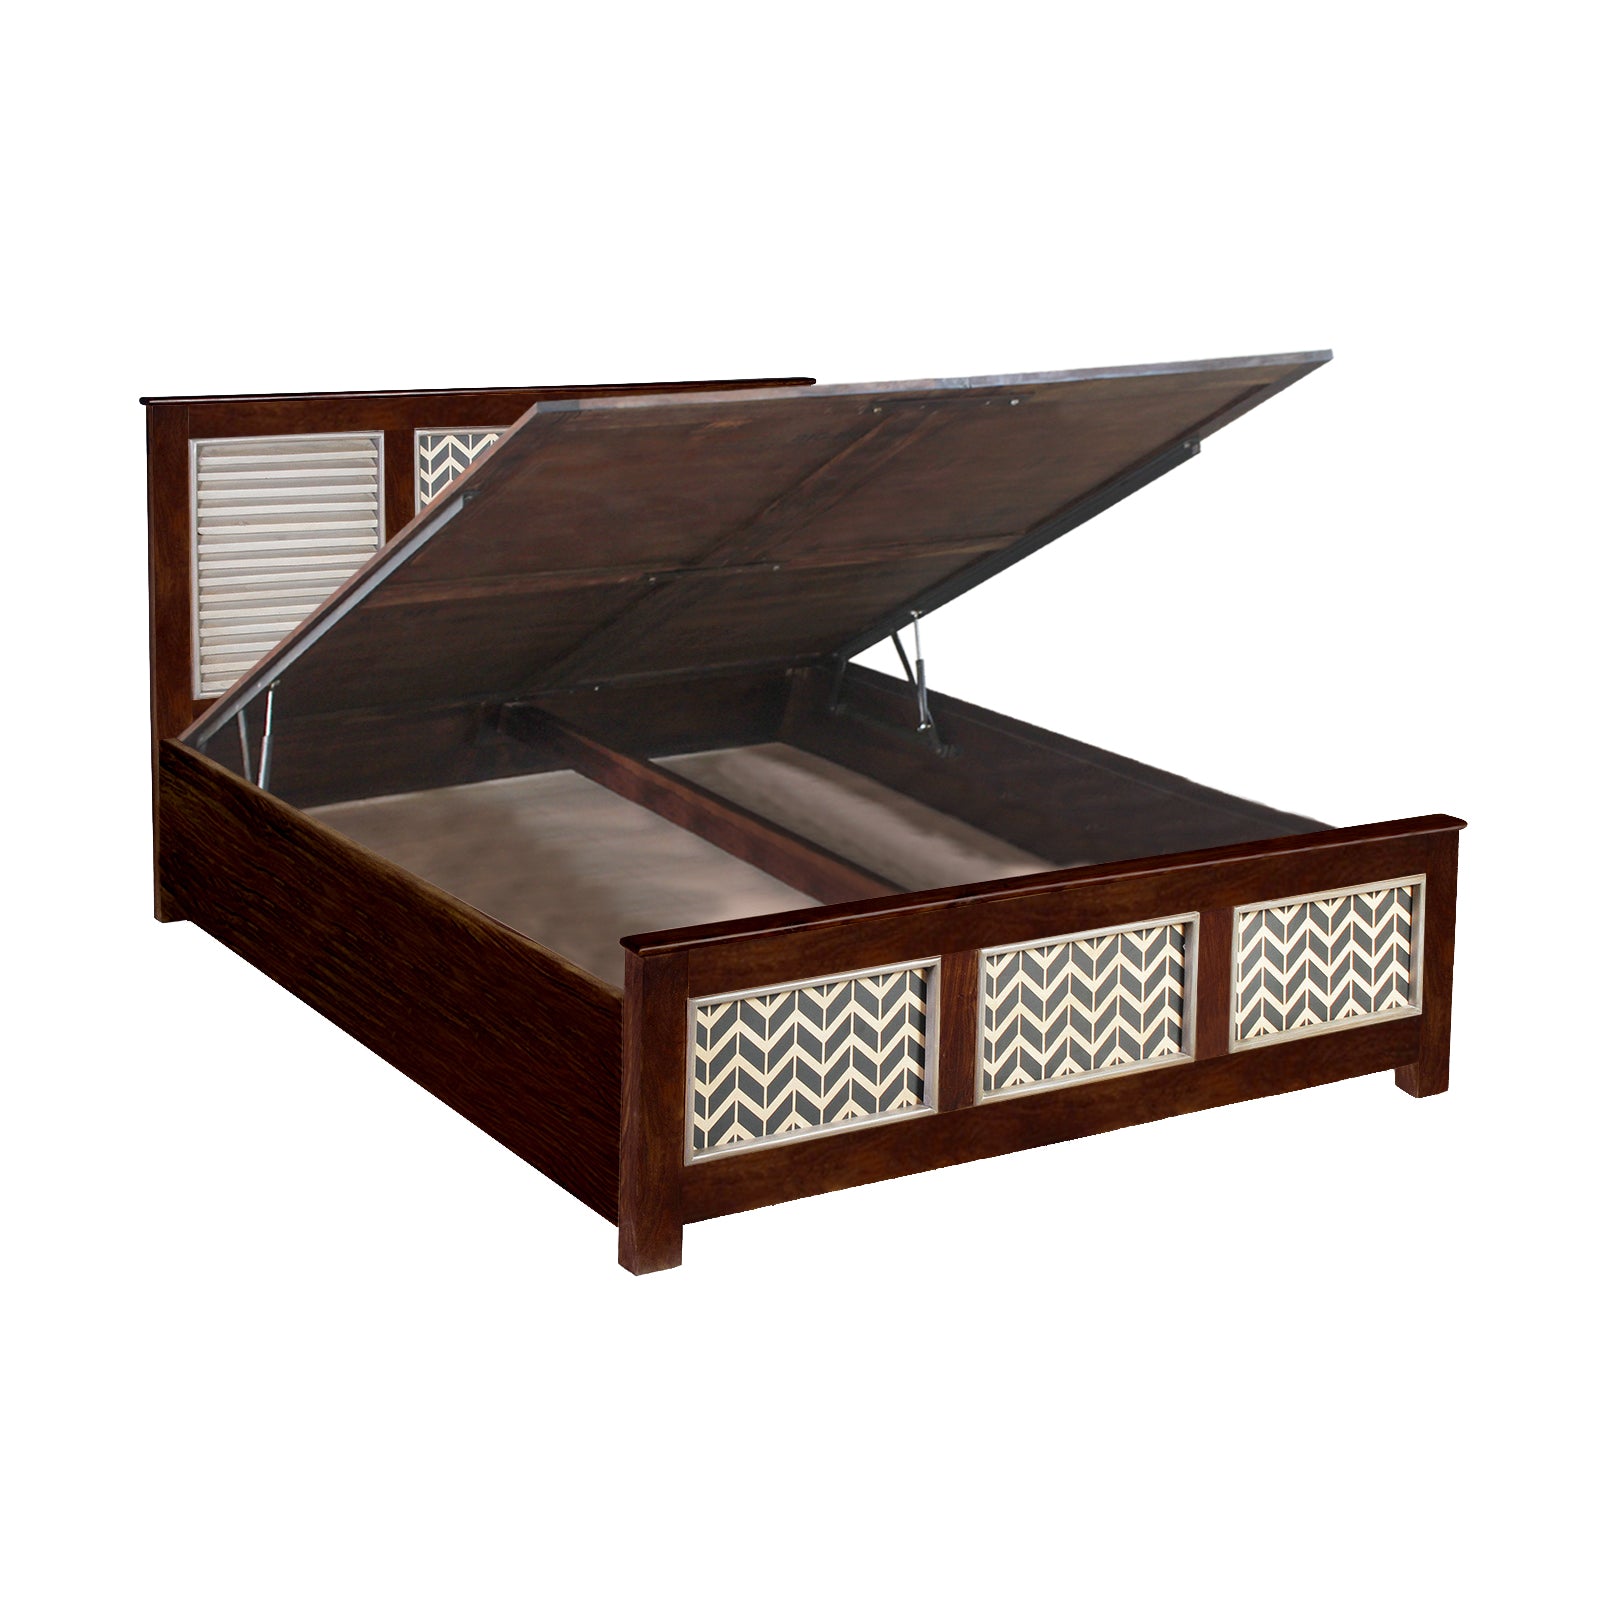 Sheesham Wood Beds online